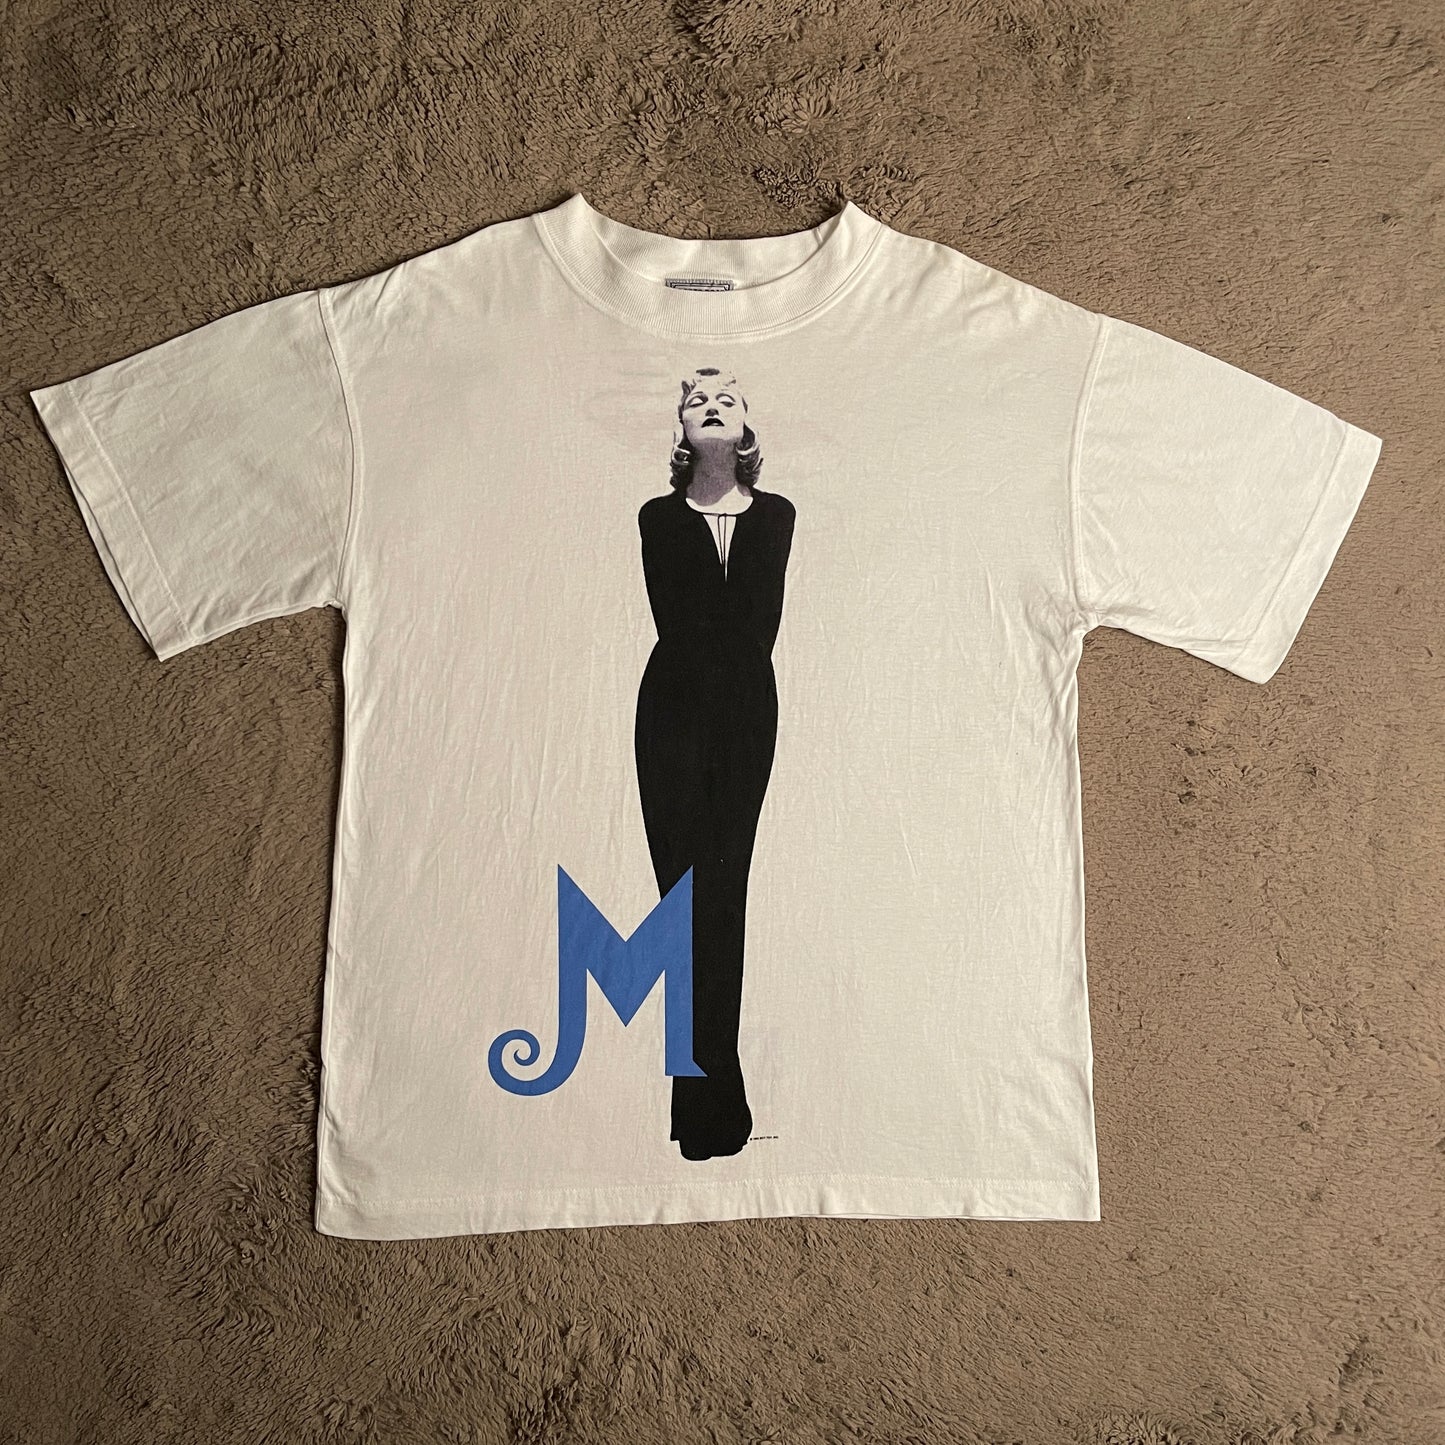 1993 Madonna The Girlie Show Vintage Tee (M)